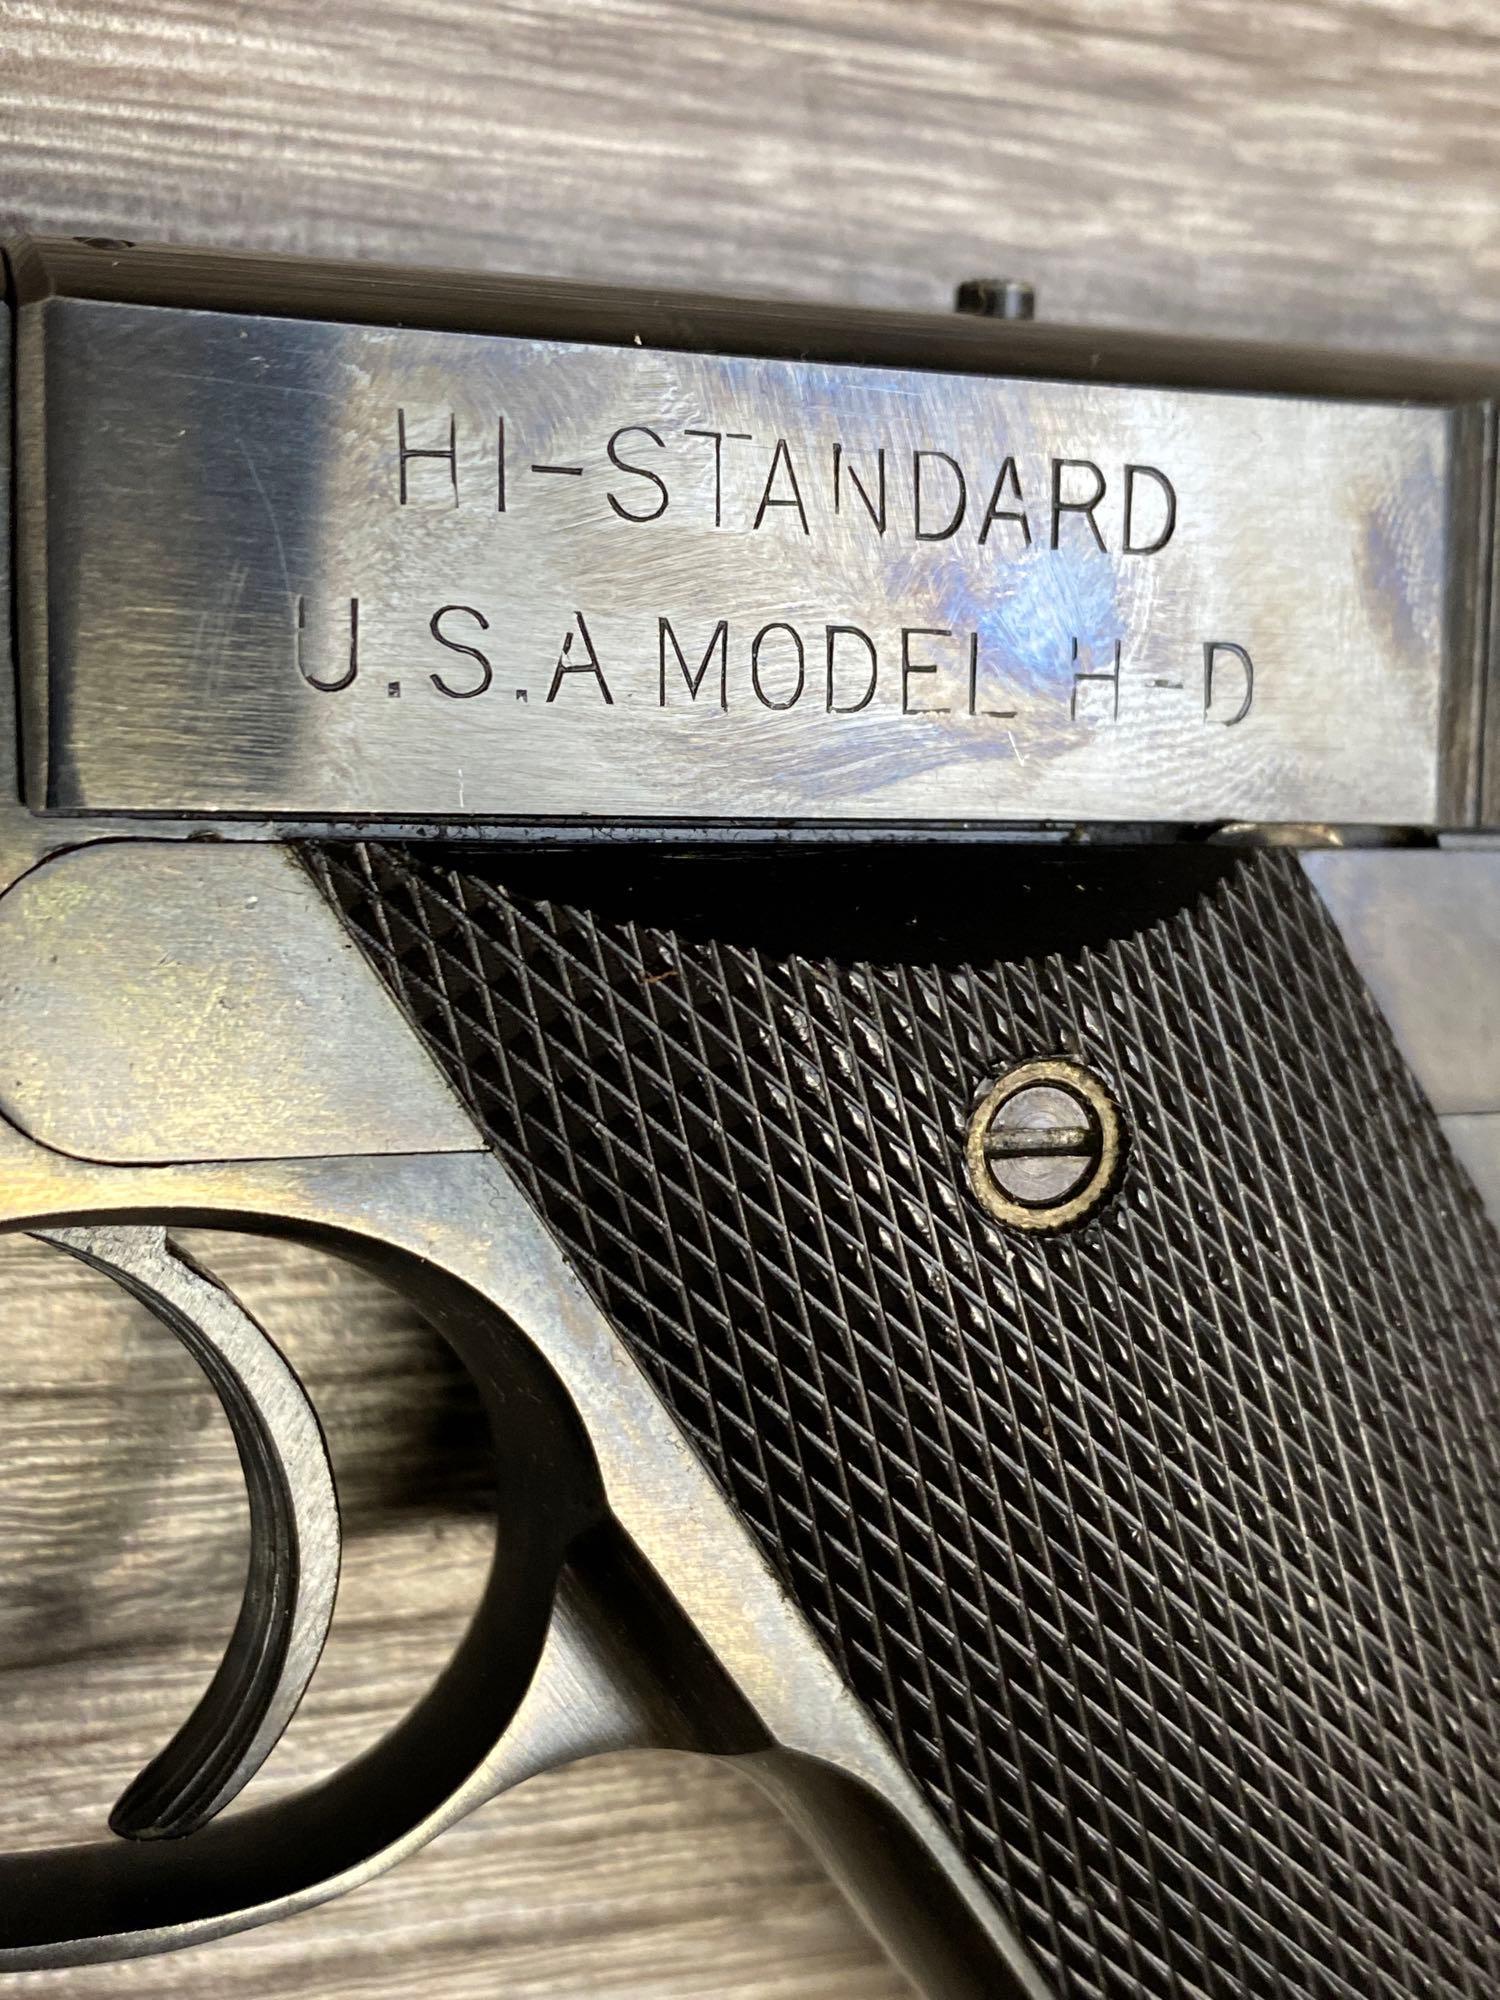 "U.S. PROPERTY" HIGH STANDARD MODEL H-D .22 LR SEMI-AUTO PISTOL W/ FACTORY BOX